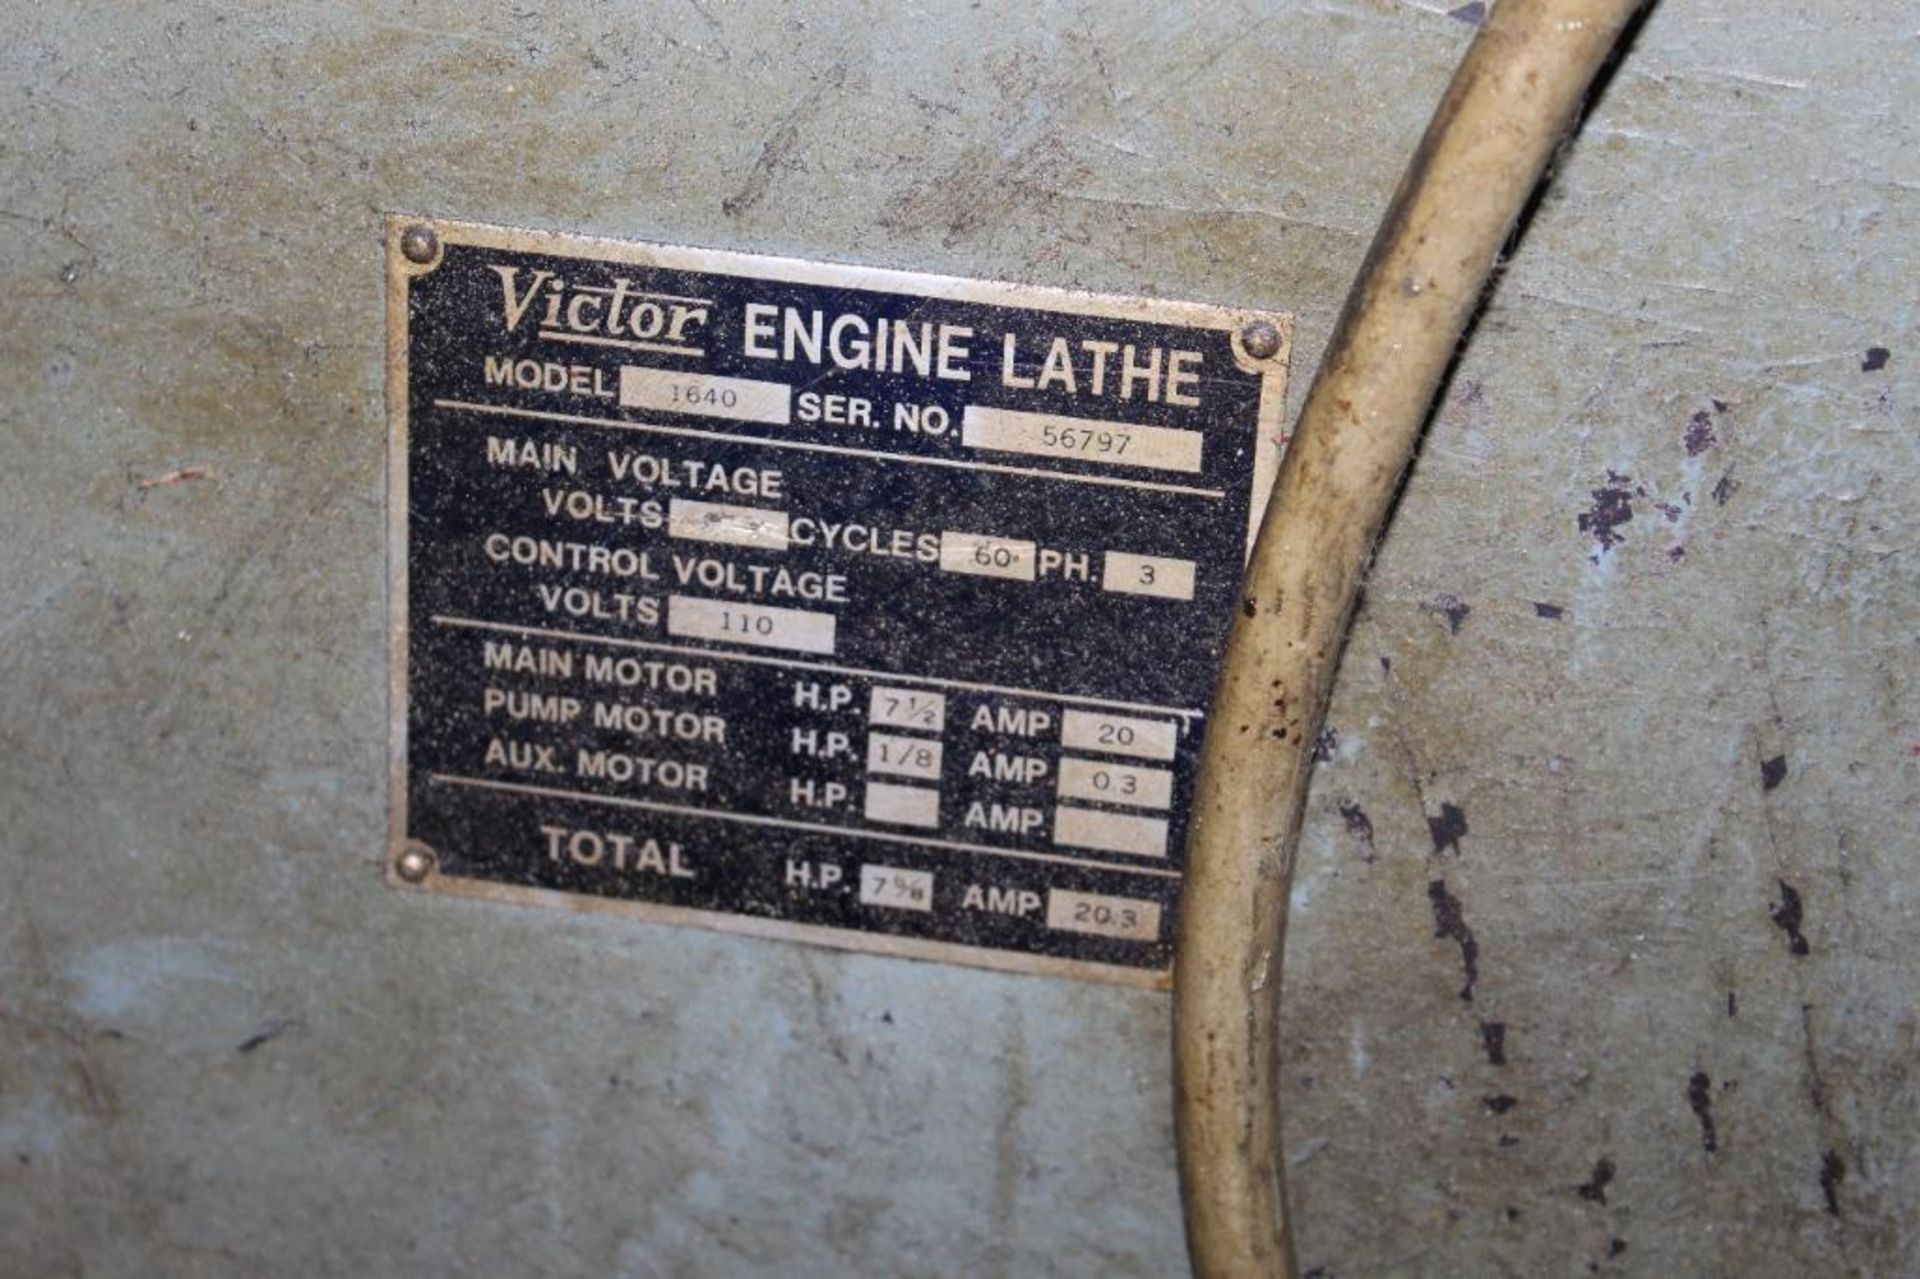 Victor Model 1640 Engine Lathe - Image 12 of 12